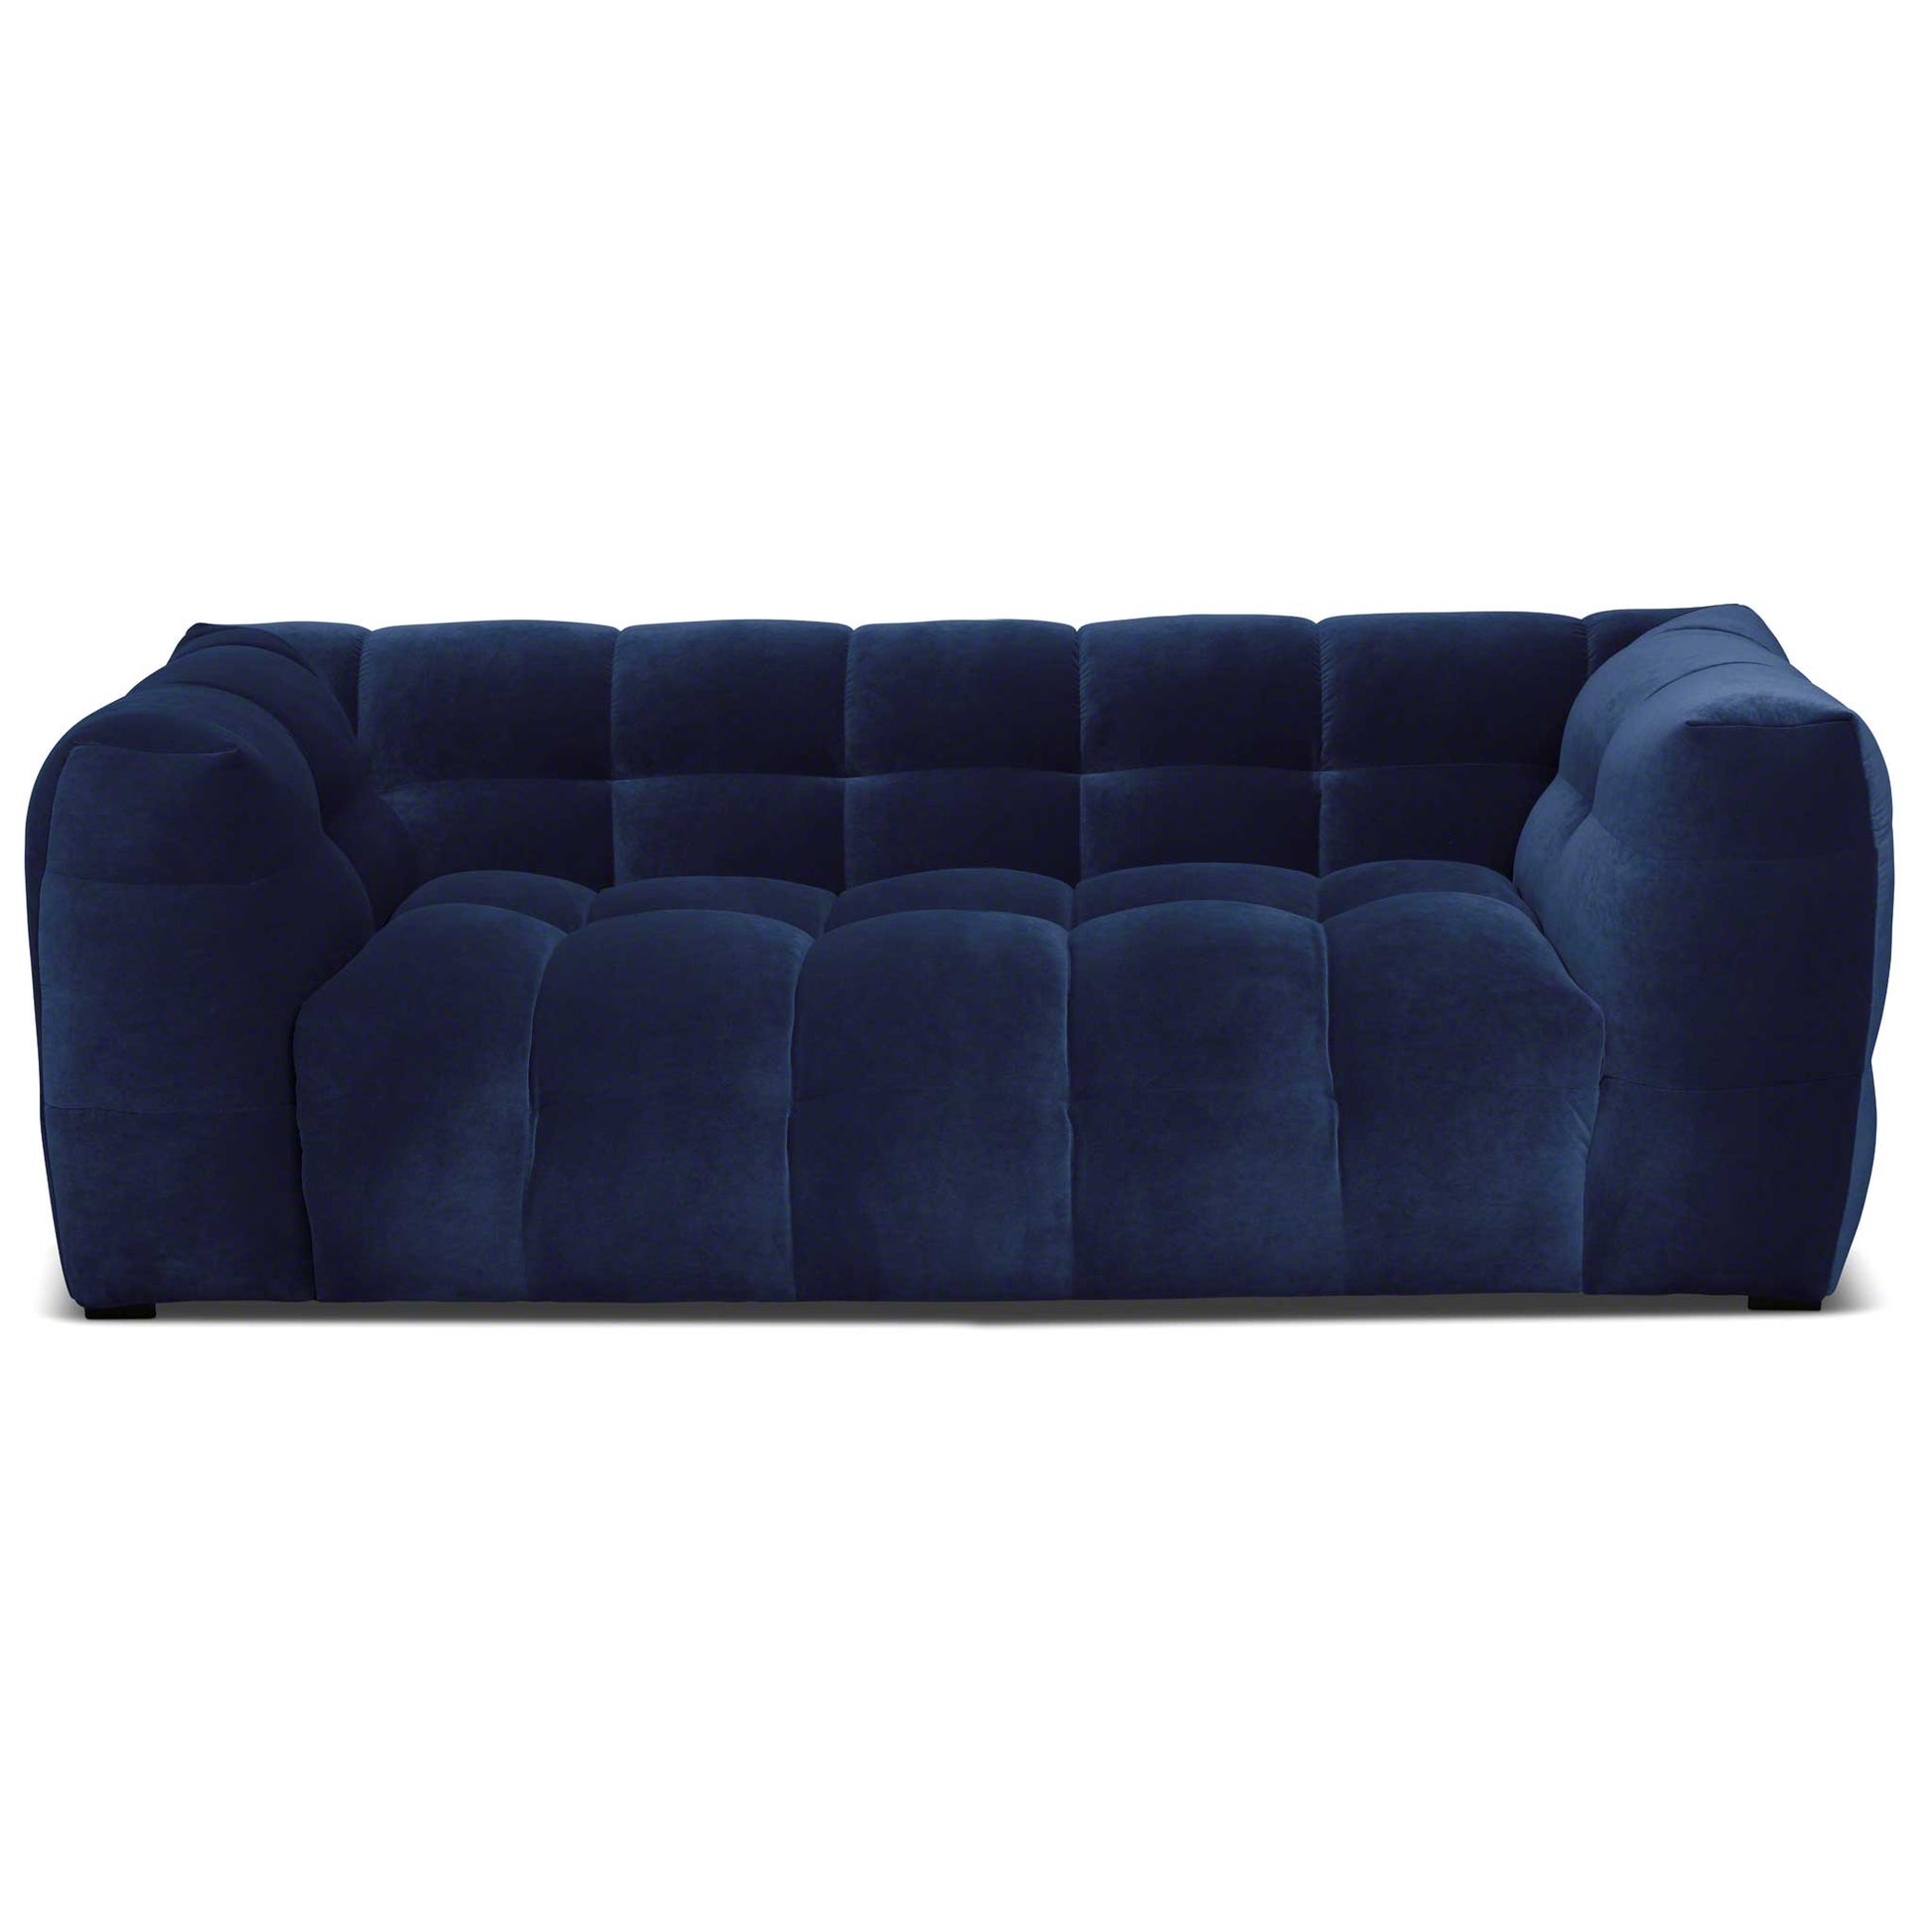 Liten 2-sits soffa i royal blå kvalitetssammet med bubbligt formspråk.